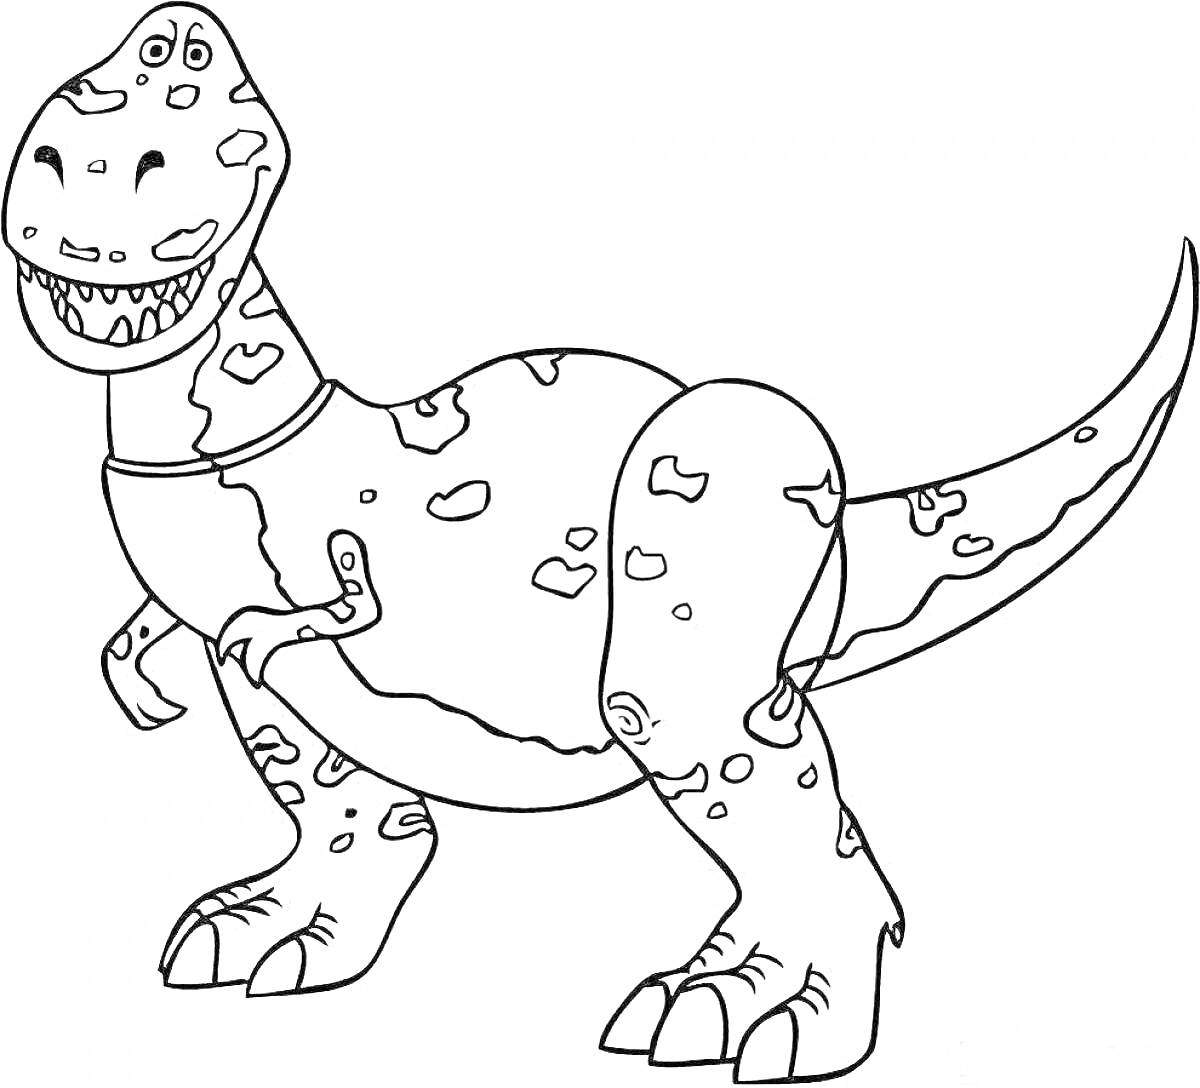 Раскраска Тарбозавр с пятнами и улыбкой